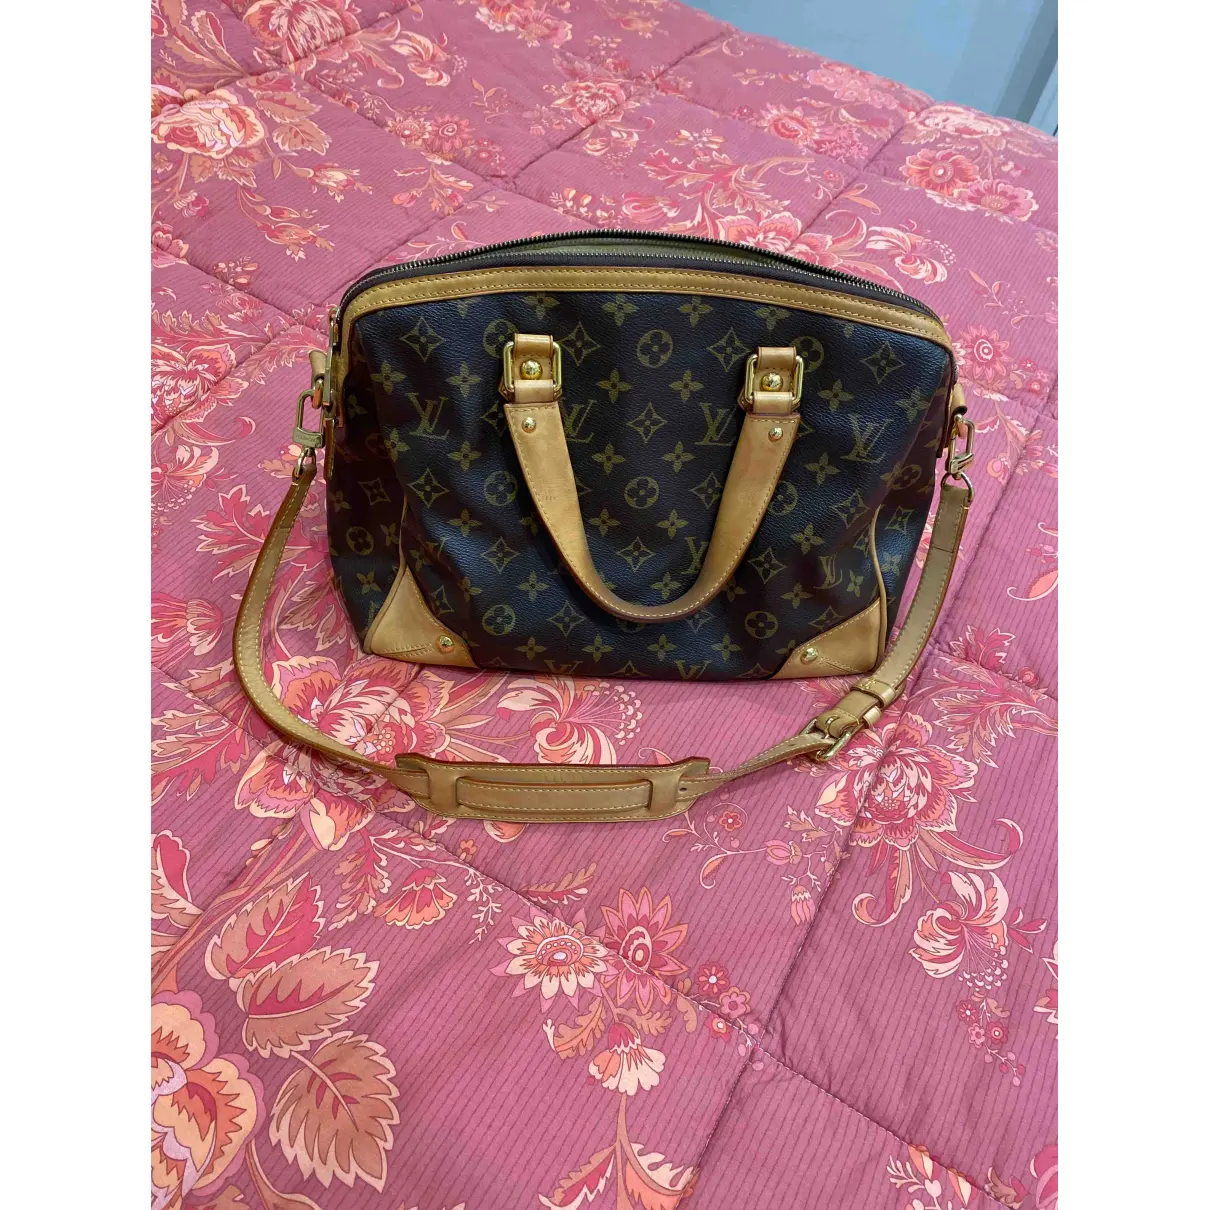 Buy Louis Vuitton Retiro  cloth handbag online